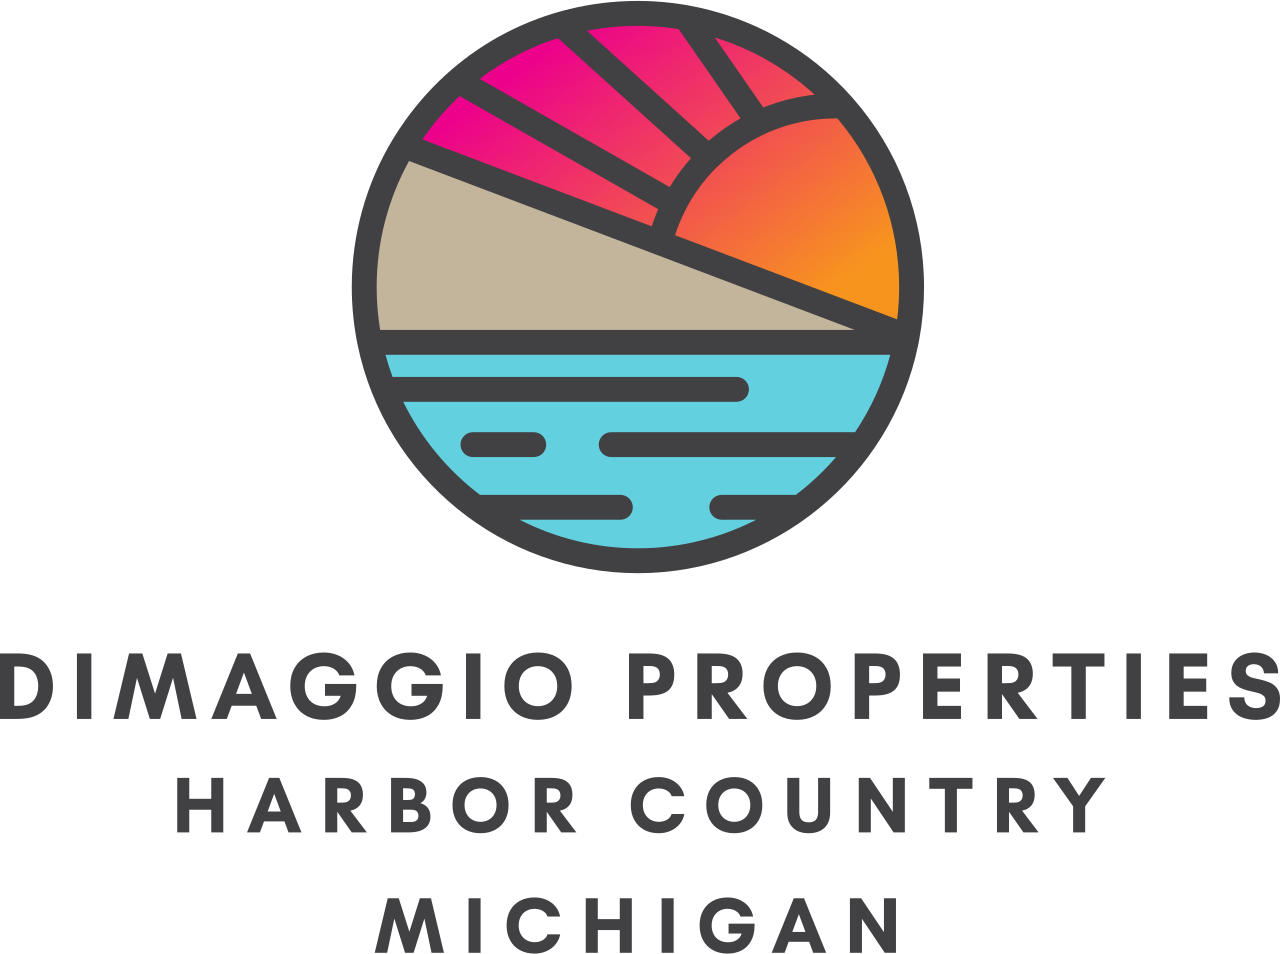 DiMaggio Properties's web page